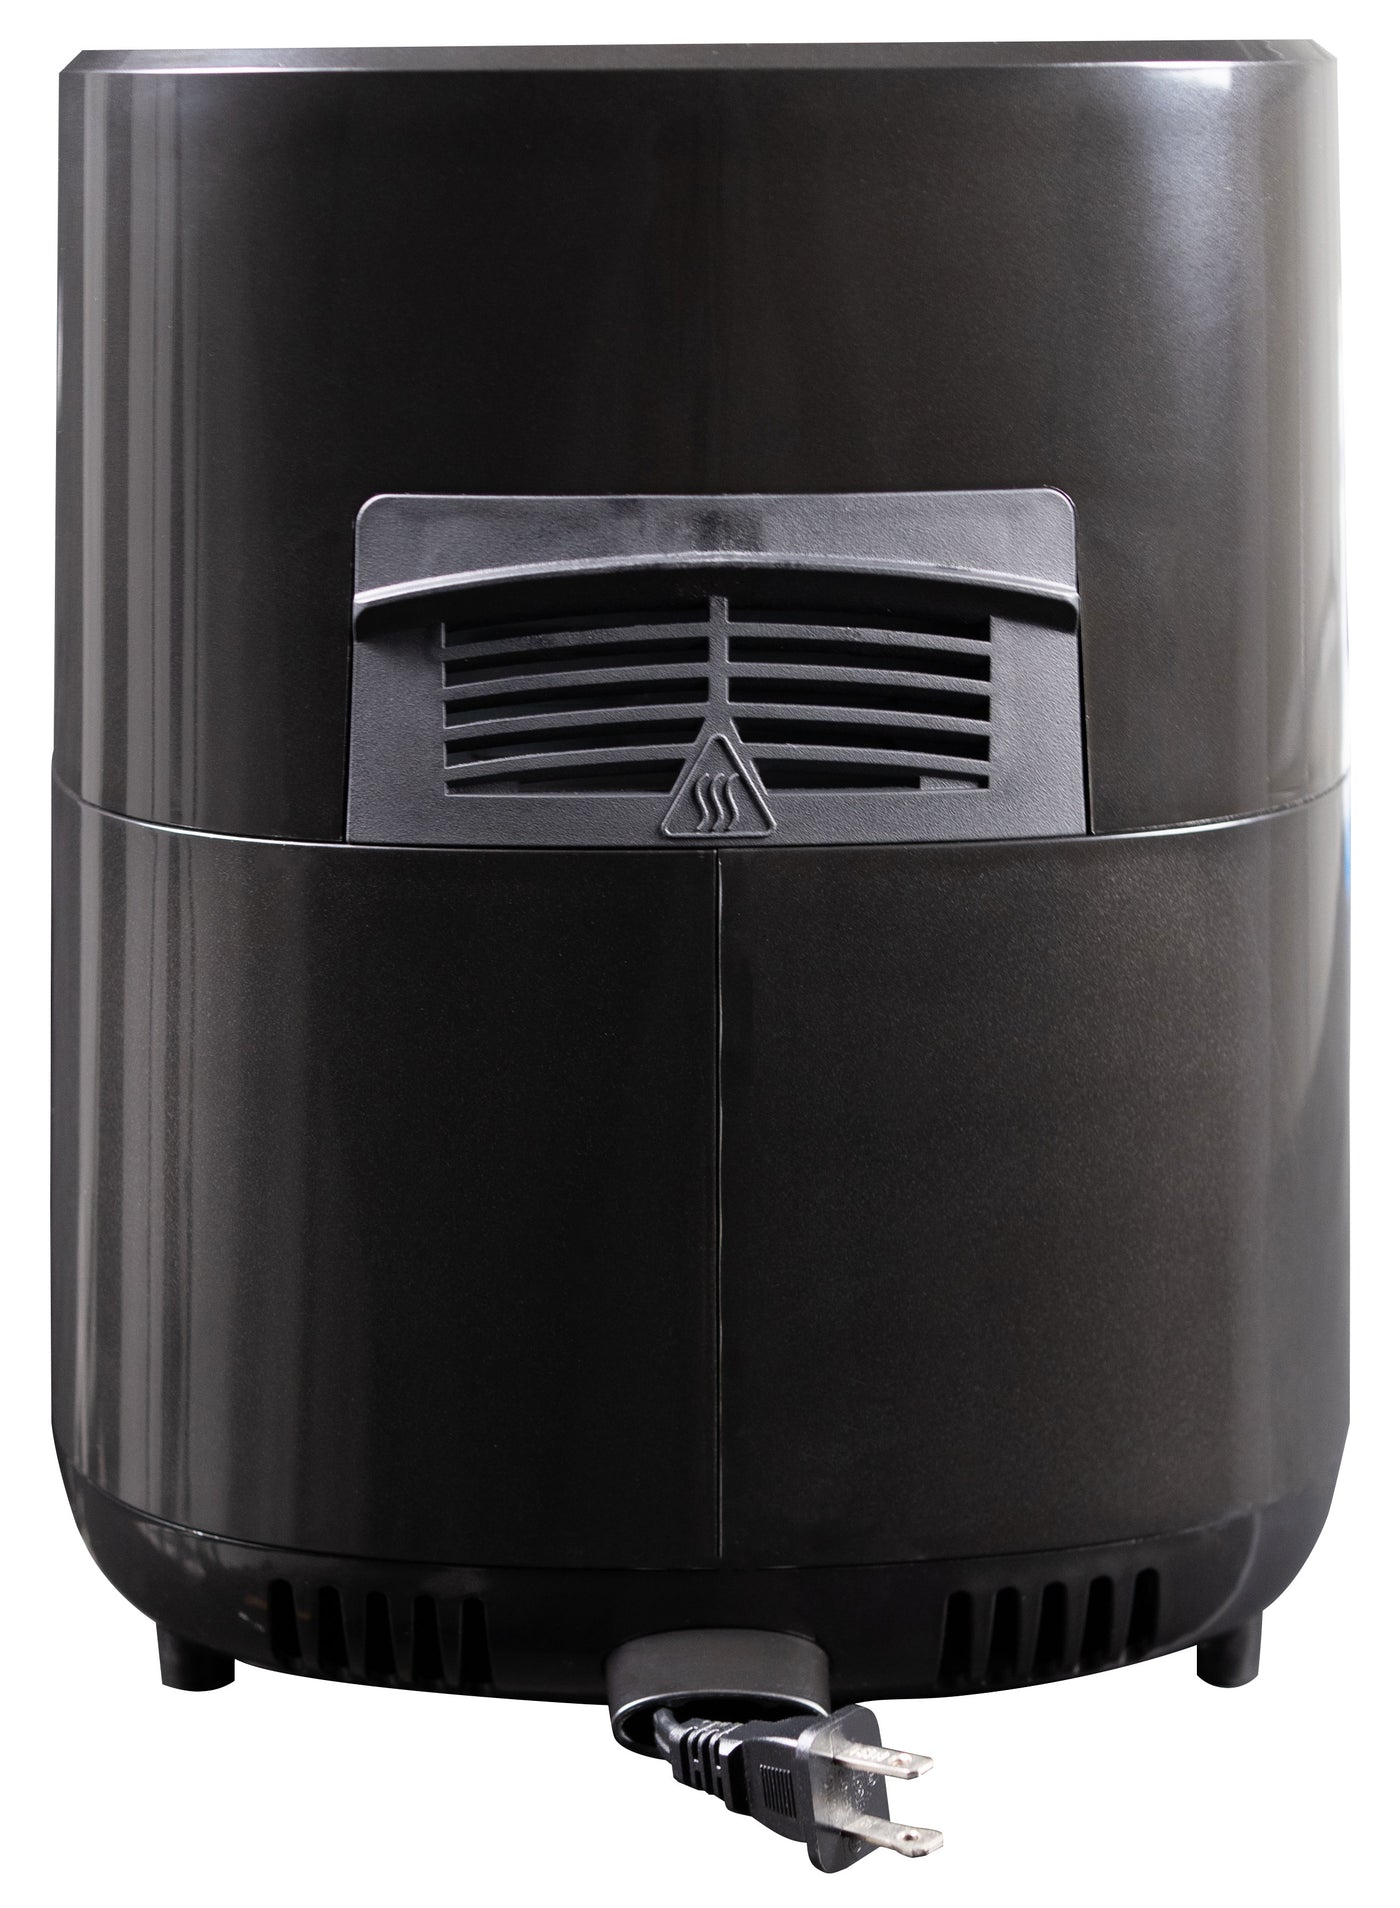 Danby Black Air Fryer (3.2 Quart) - DBAF03224BD11